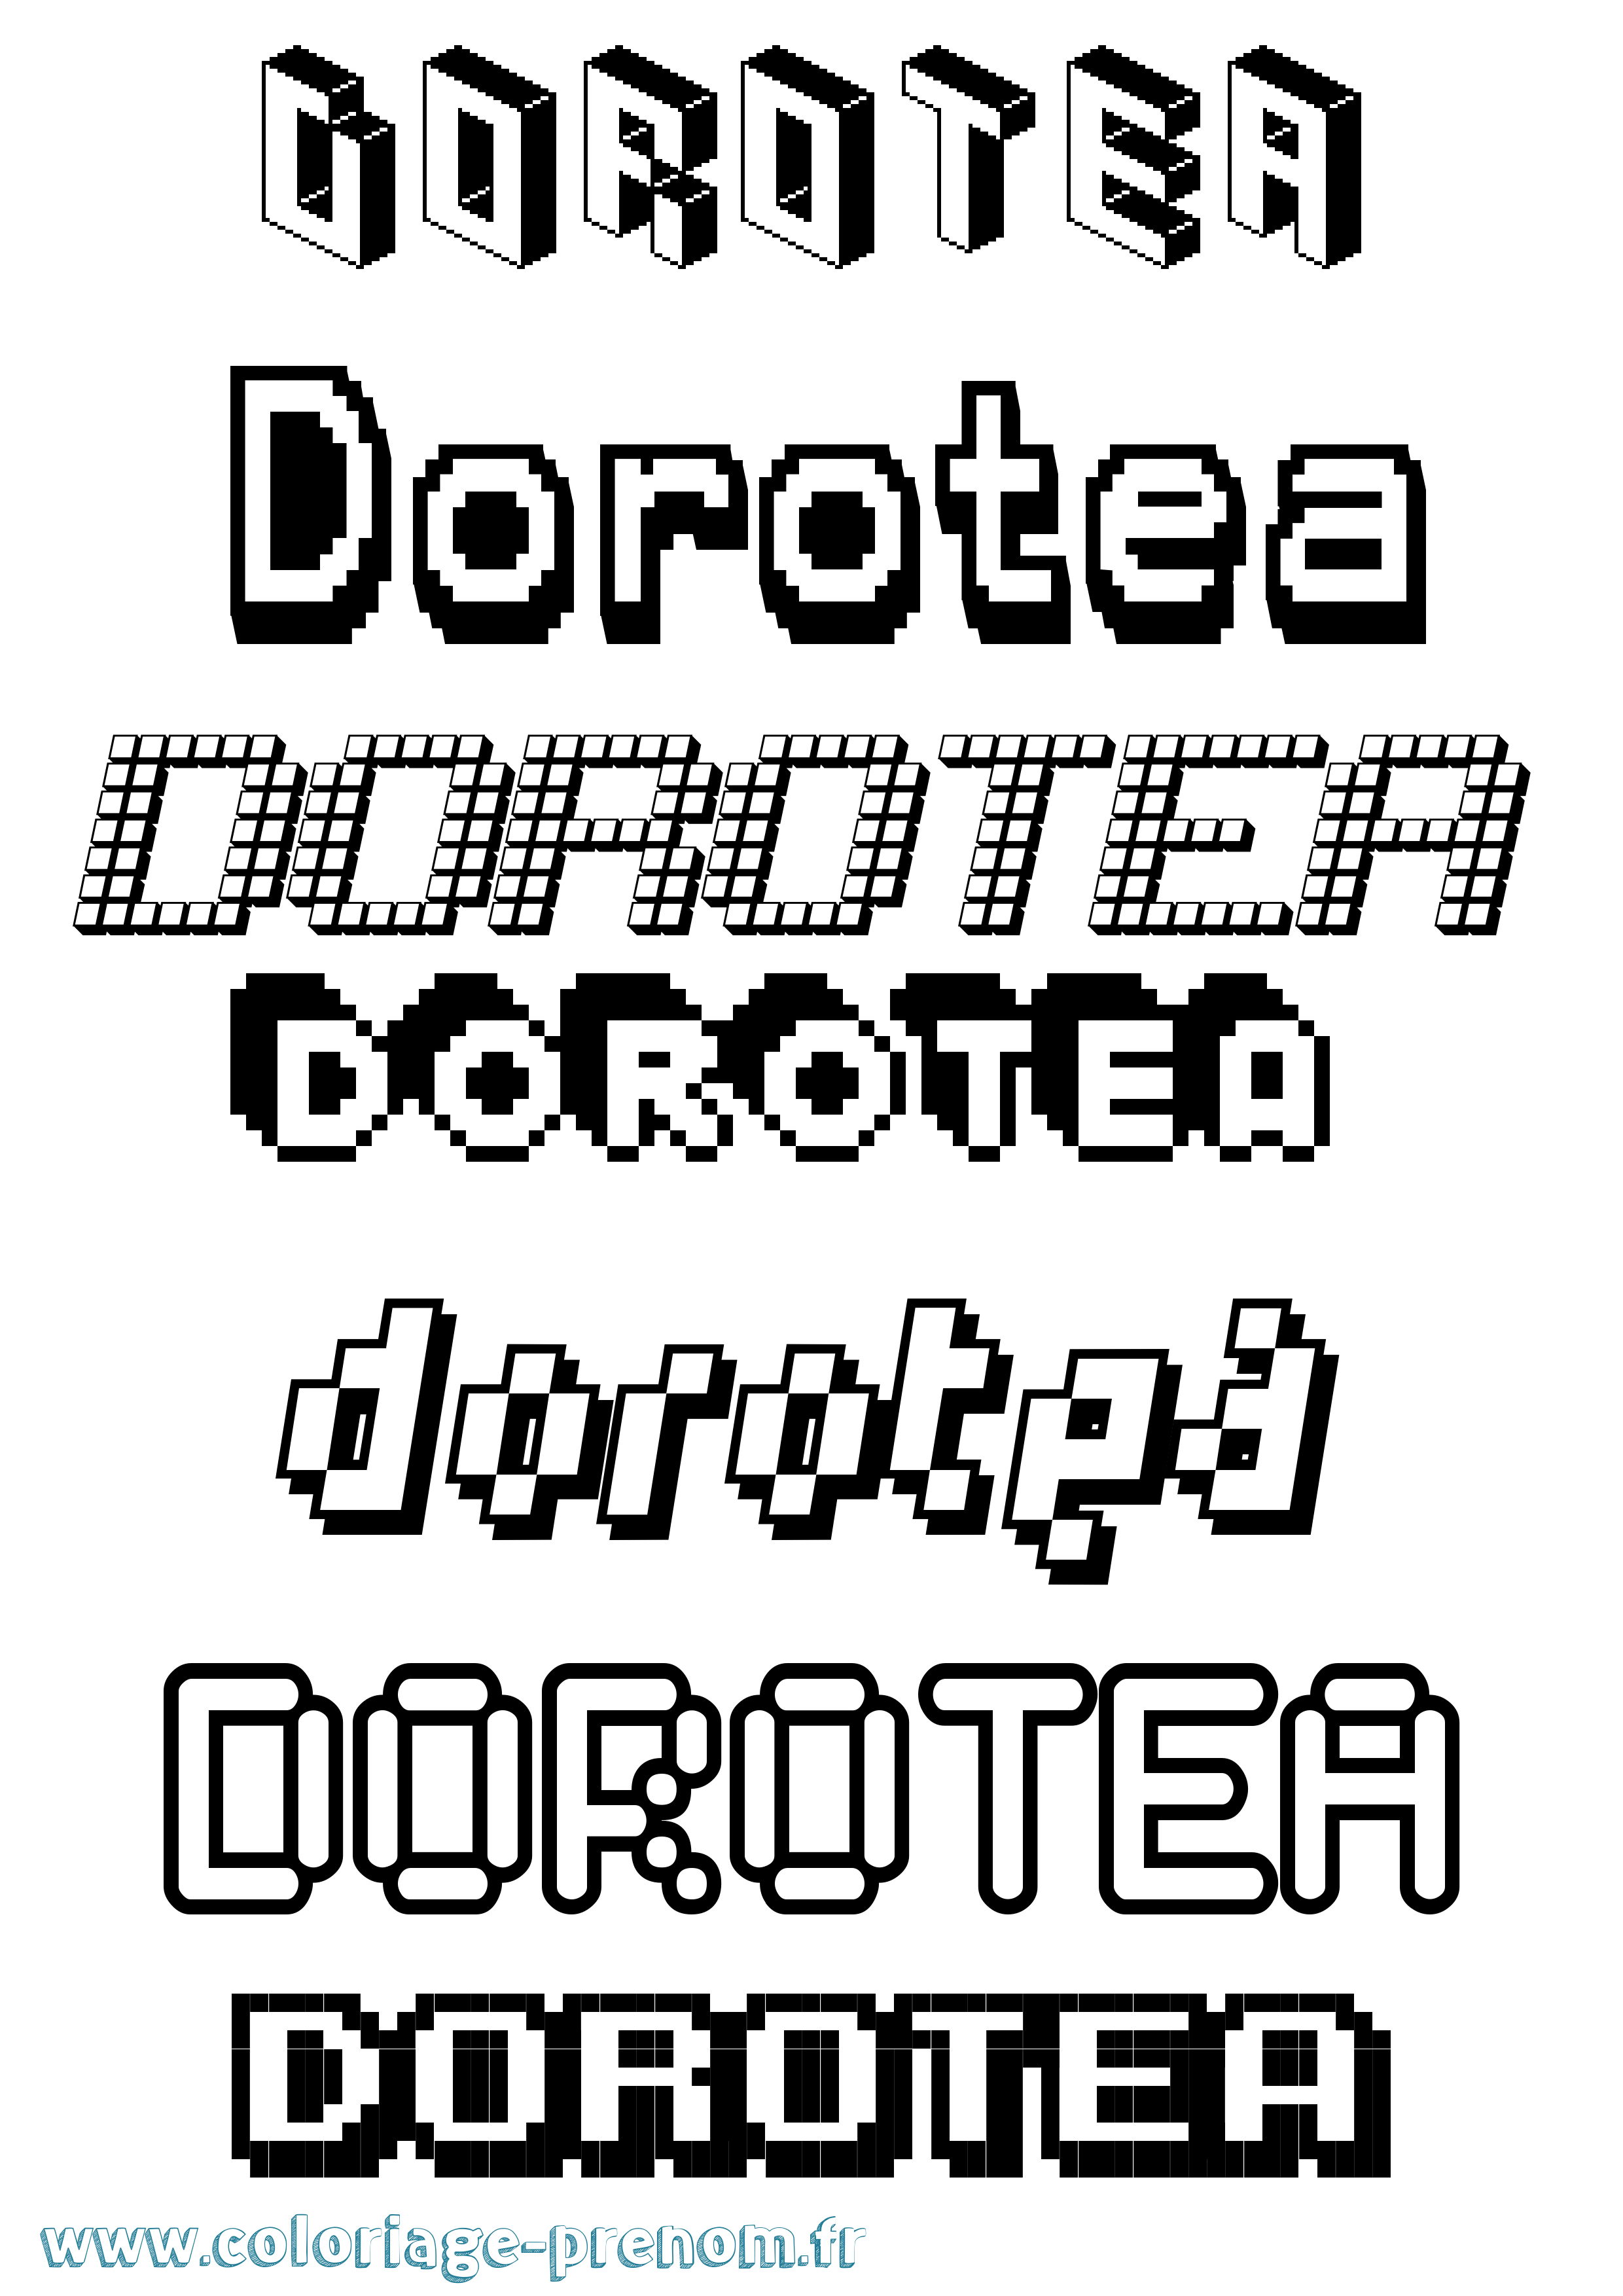 Coloriage prénom Dorotea Pixel